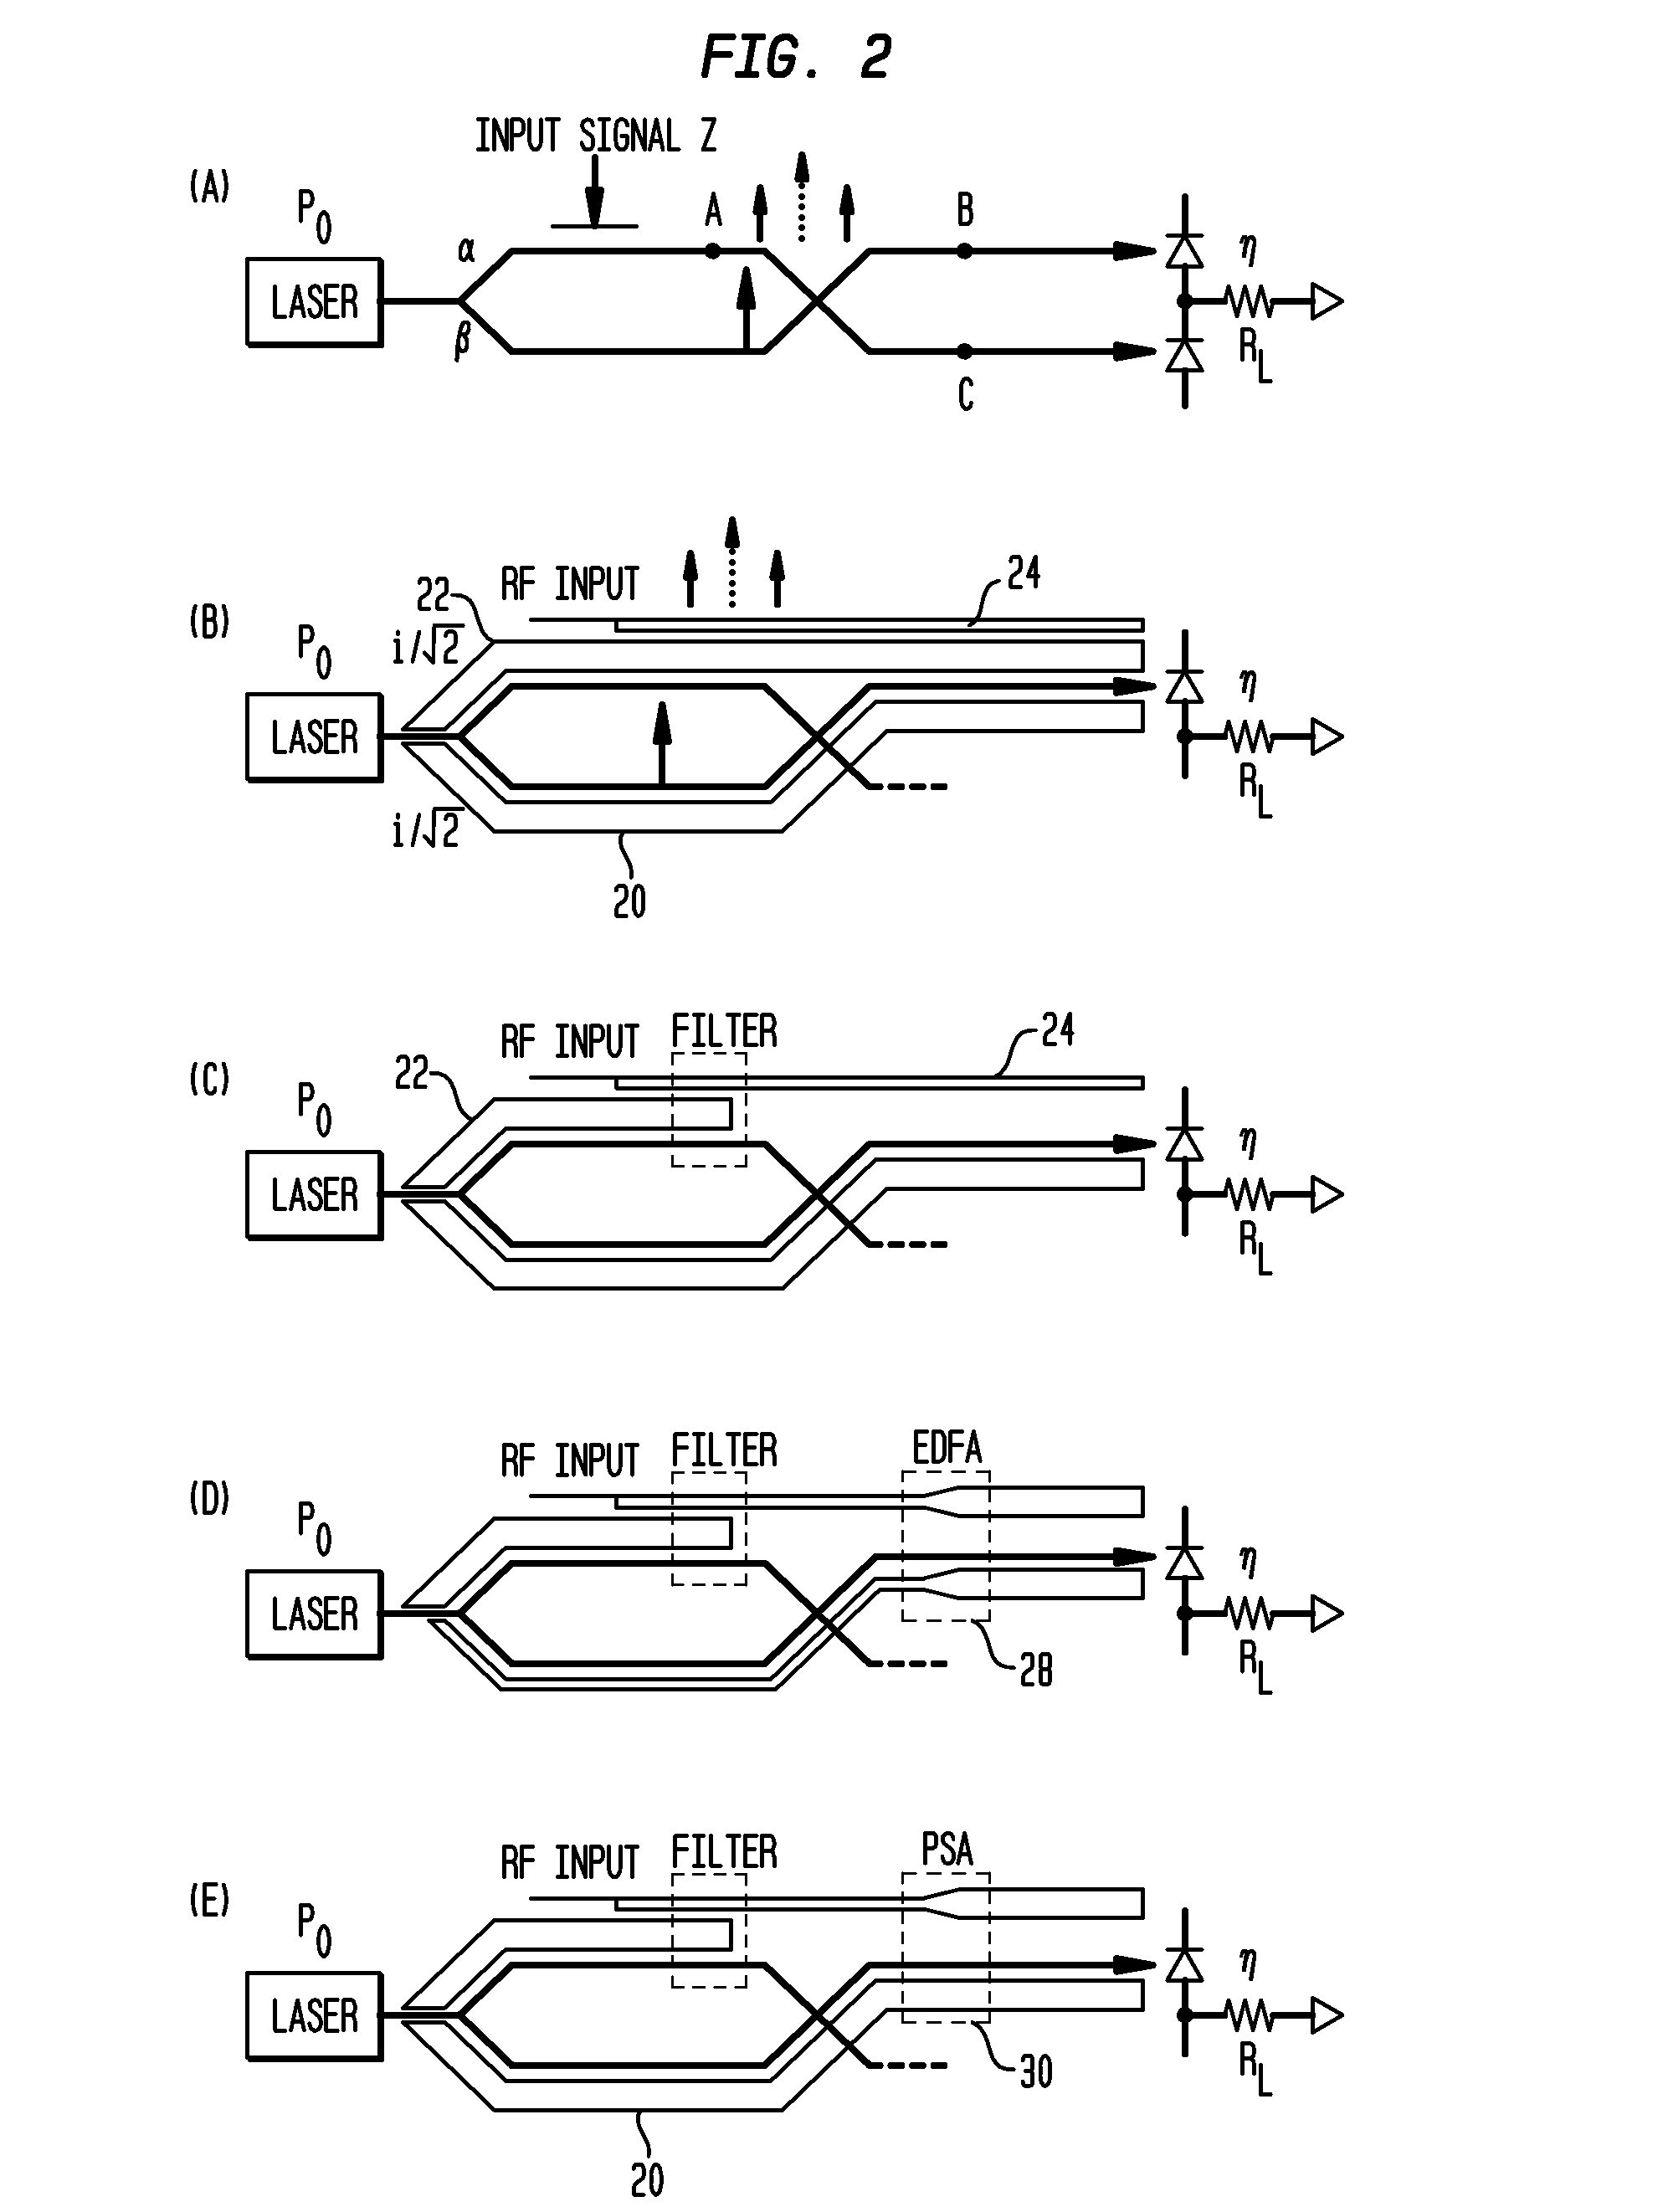 Method and apparatus for optimized analog RF optical links